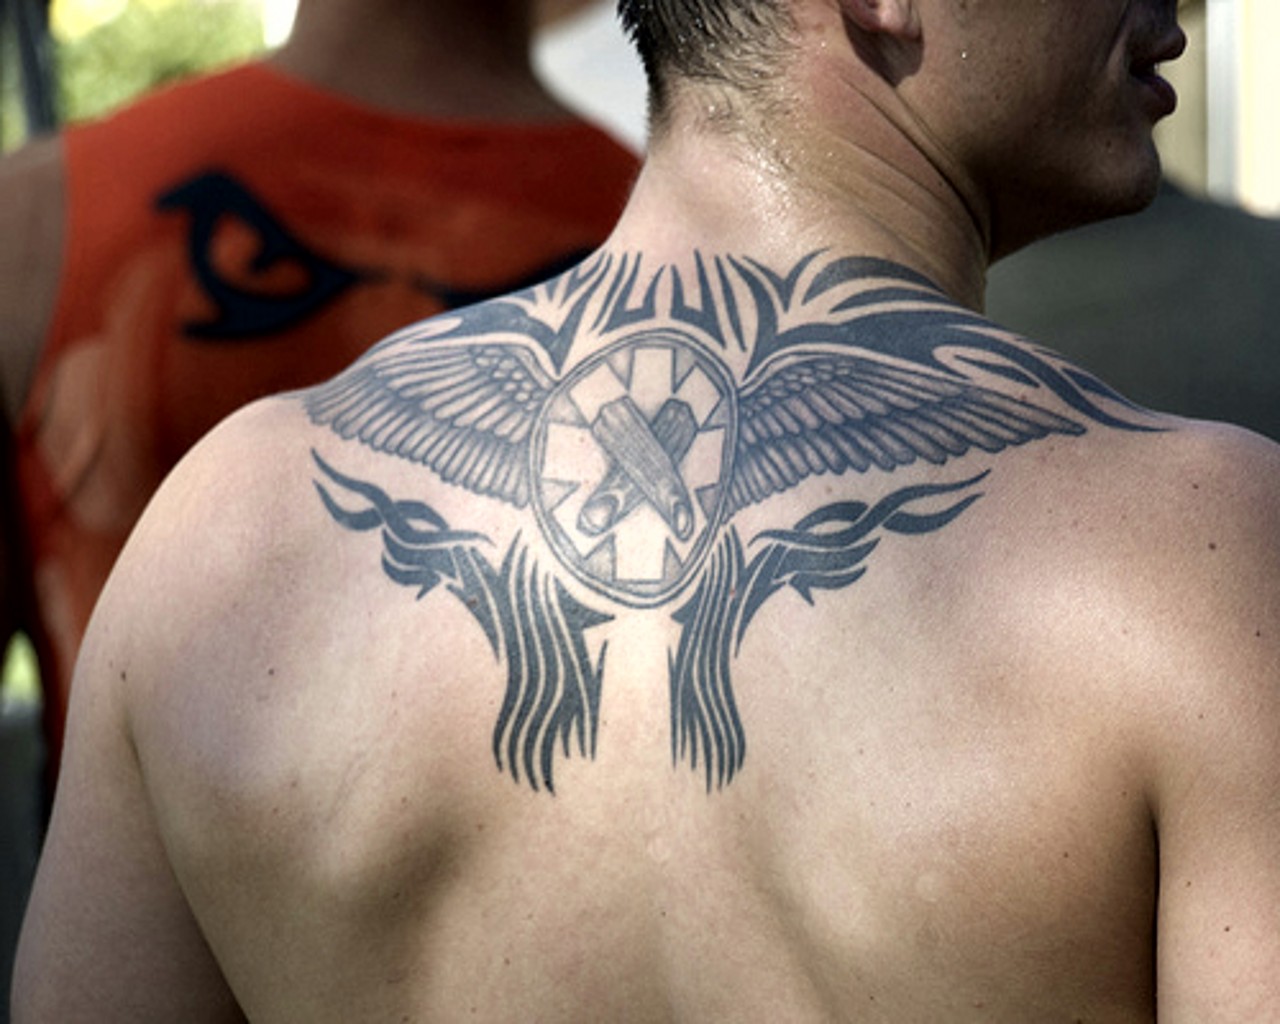 Top 10 Sexiest Tribal Back Tattoos For Men | Mr. RauRauR